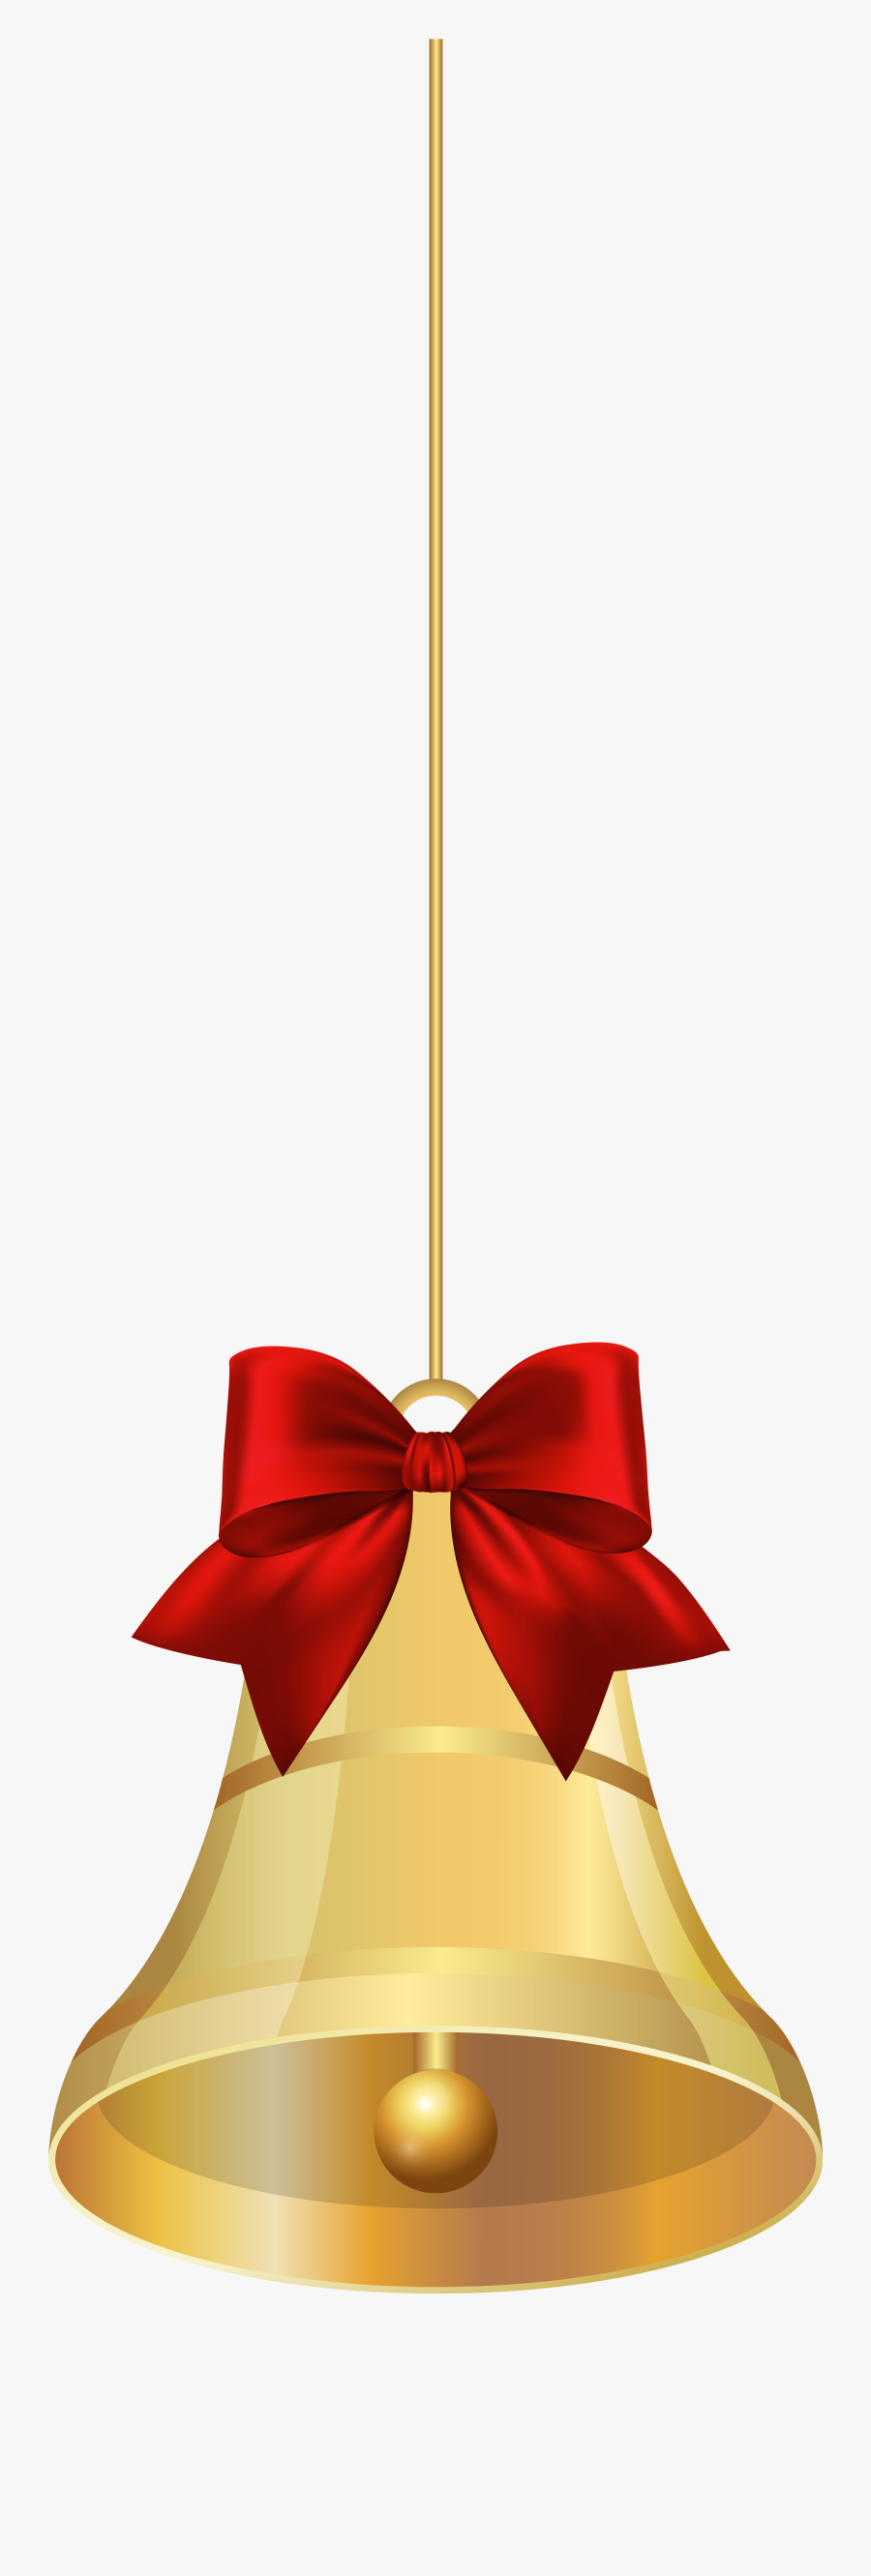 Hanging Bells Png - Hanging Christmas Bells Png, Transparent Clipart